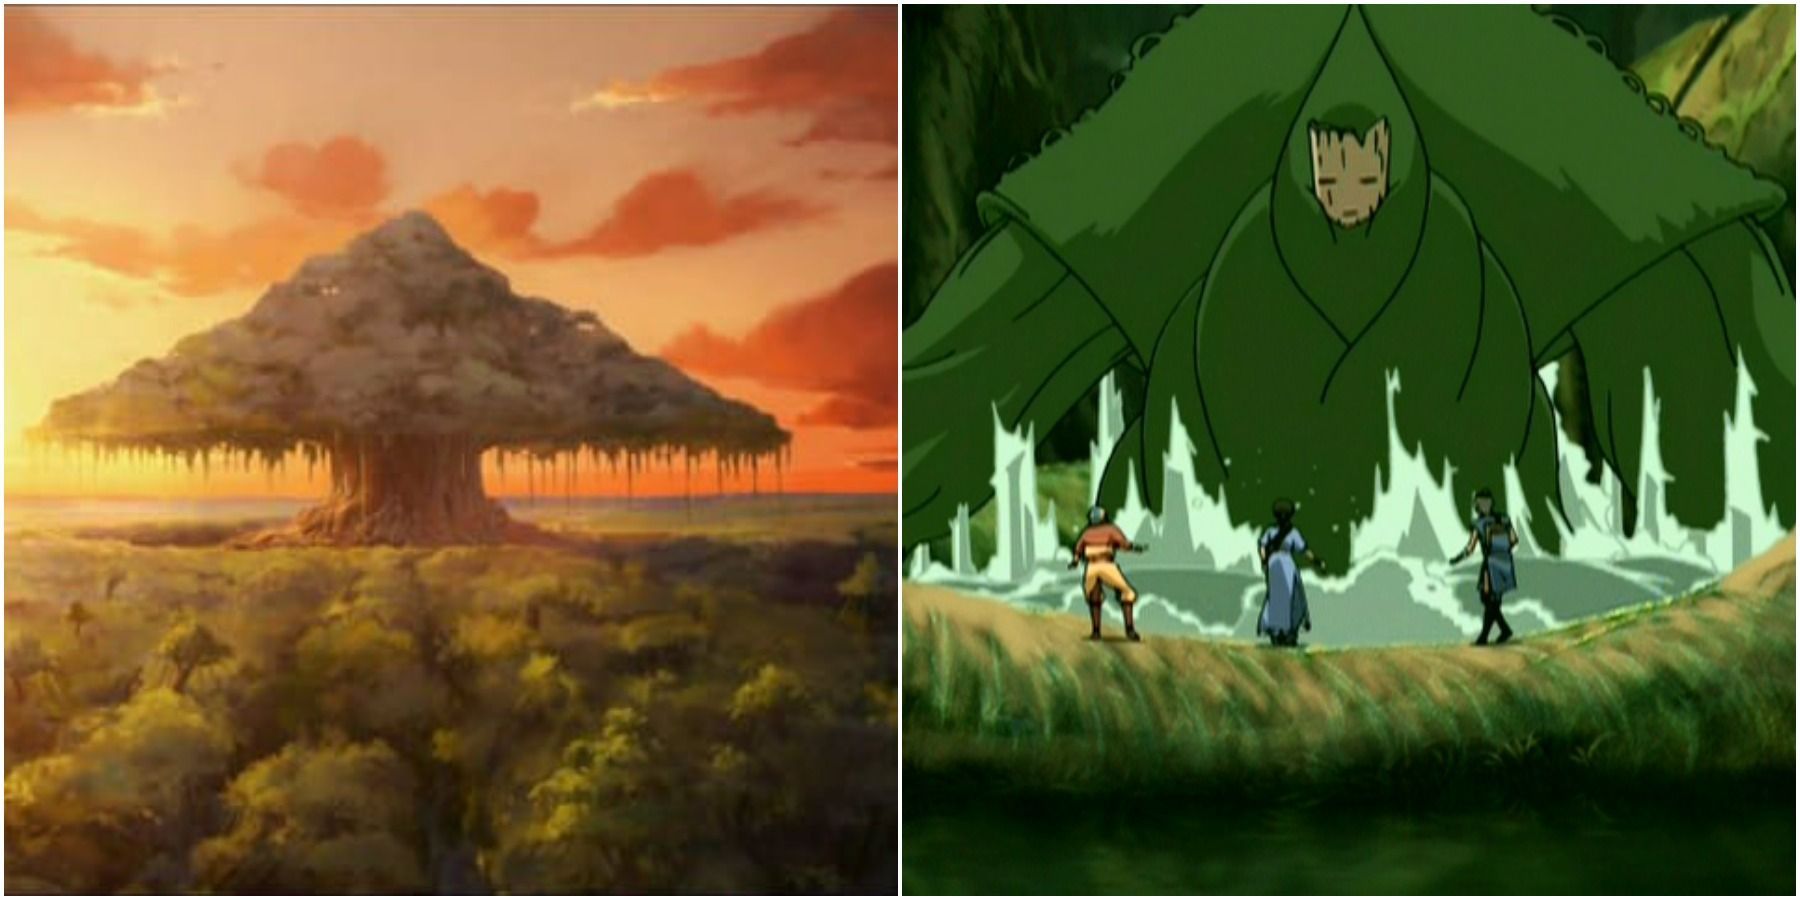 The Swamp Vine Monster Ambush in Avatar: The Last Airbender